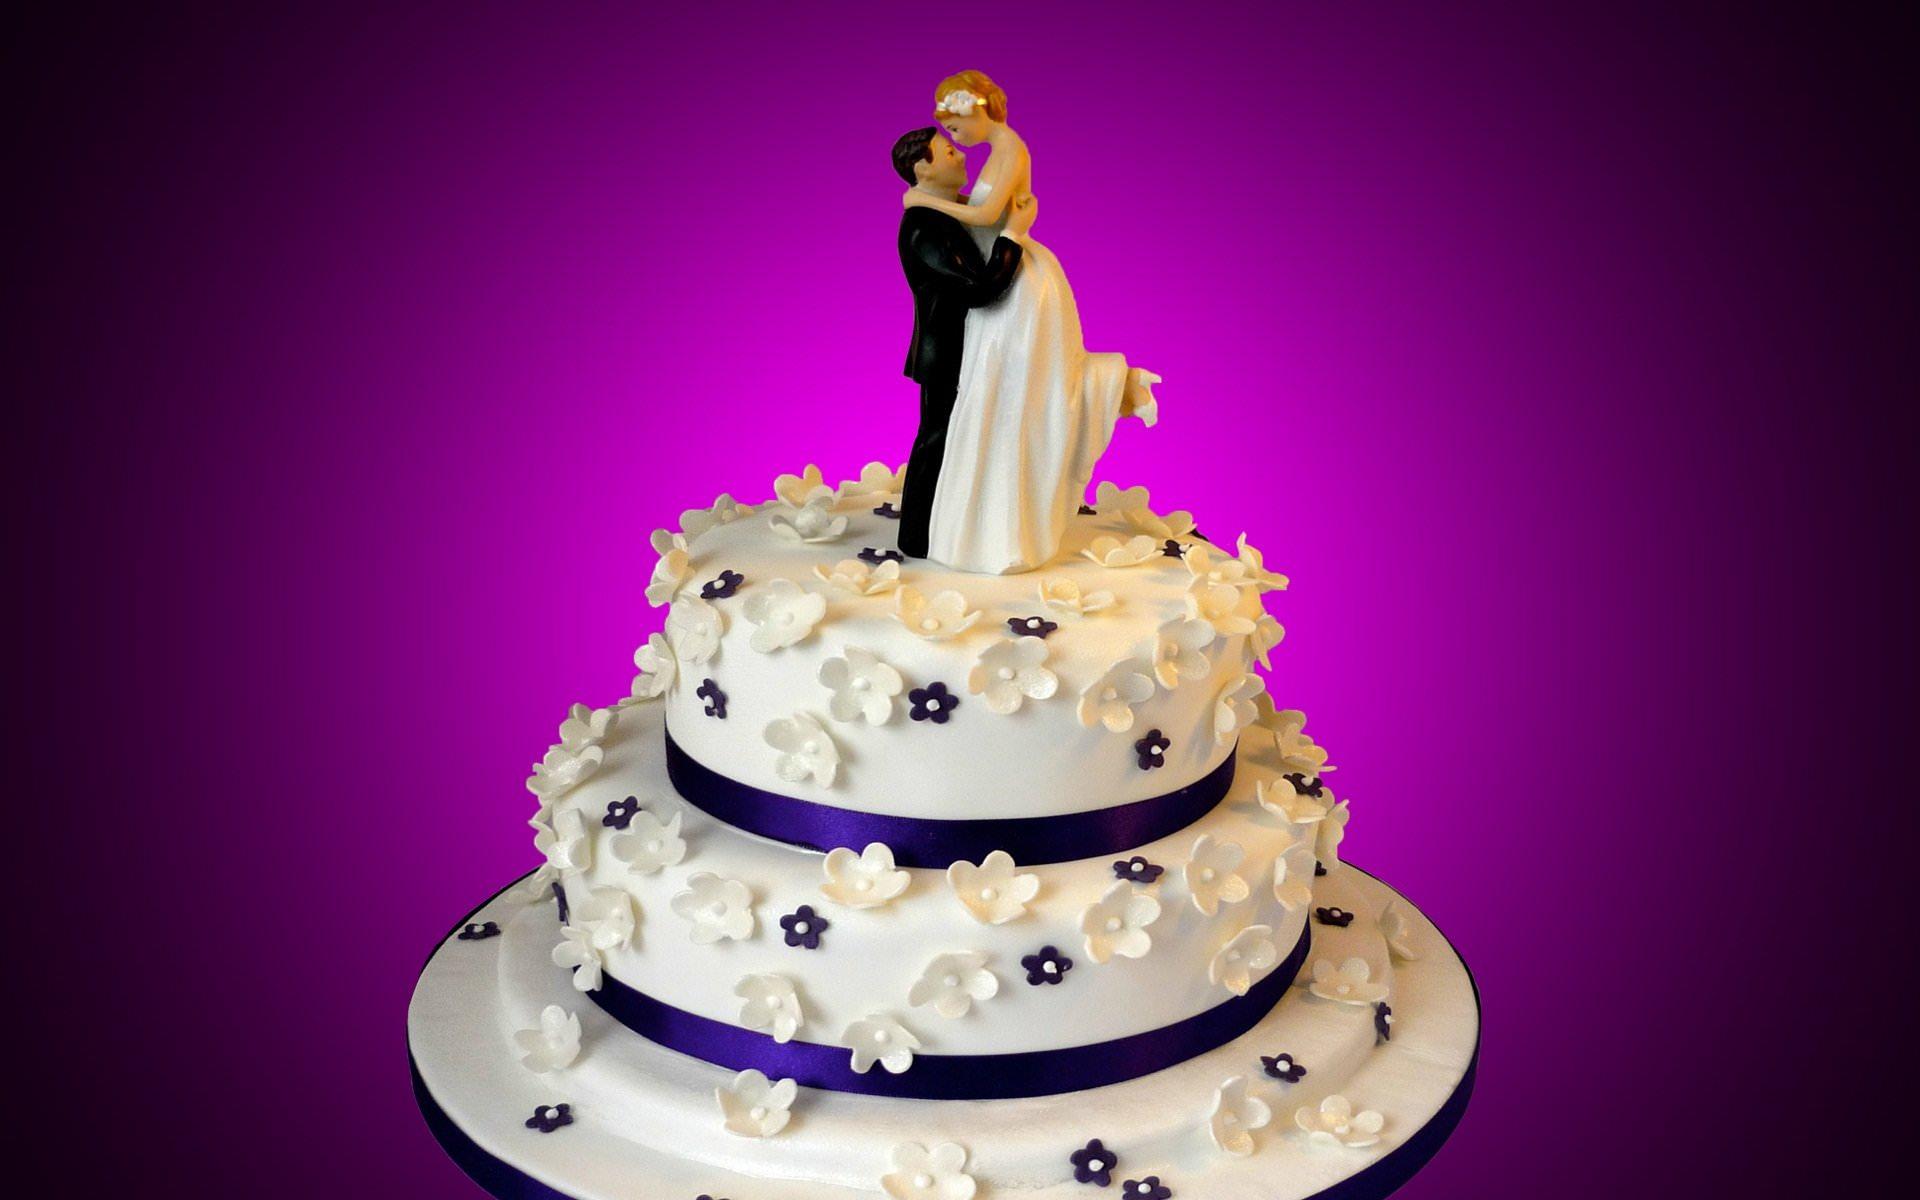 Happy anniversary Cake Image HD Wallpaper Beautiful Cake wedding